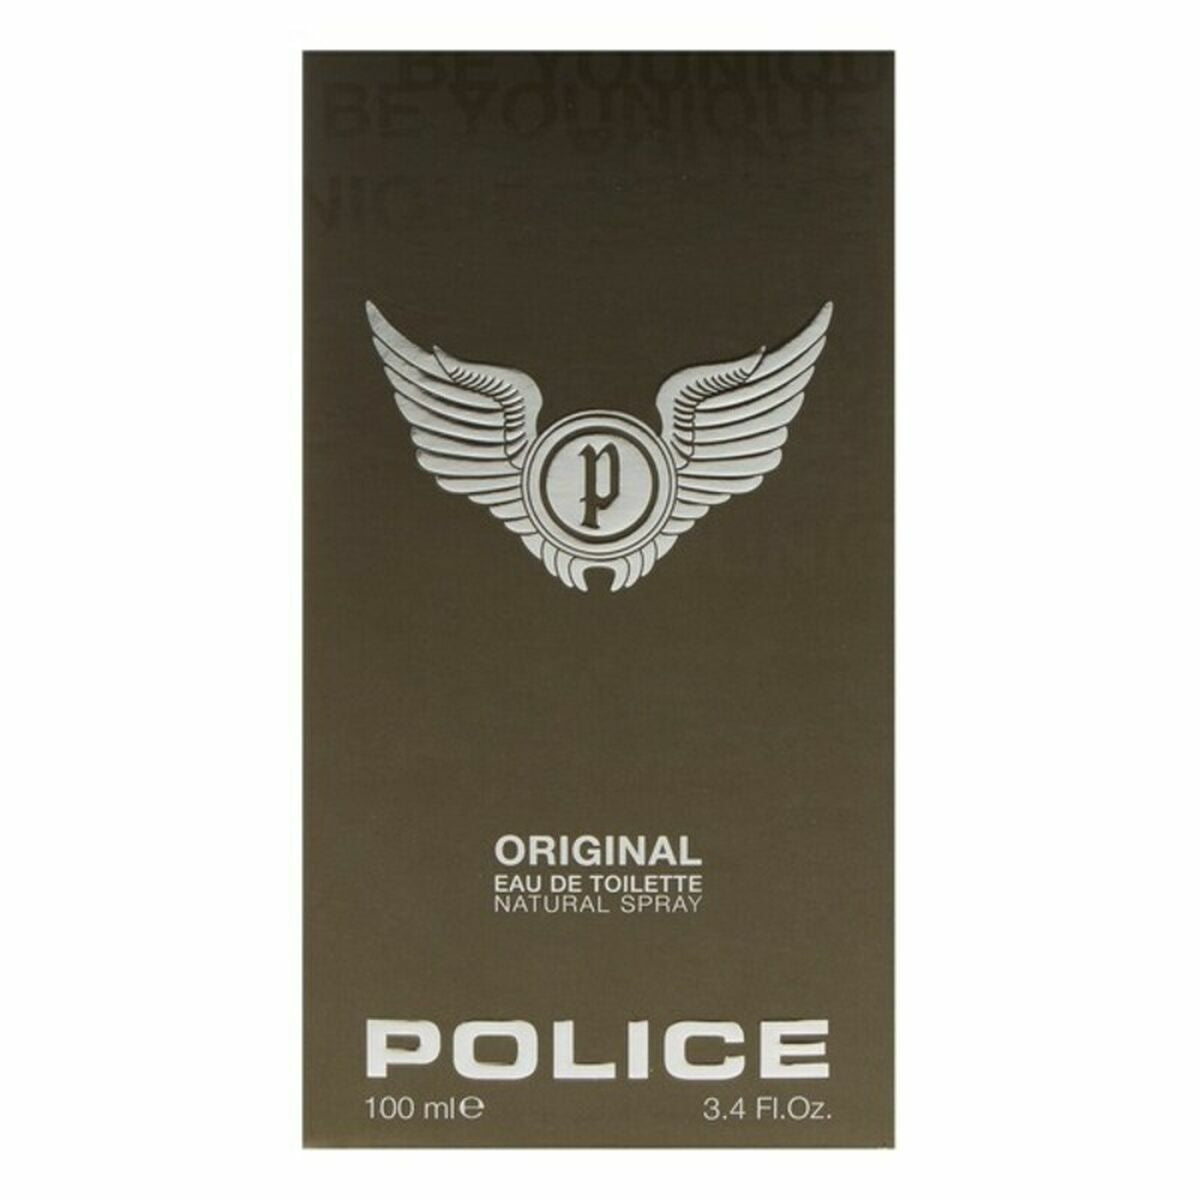 Herenparfum Police Original EDT 100 ml